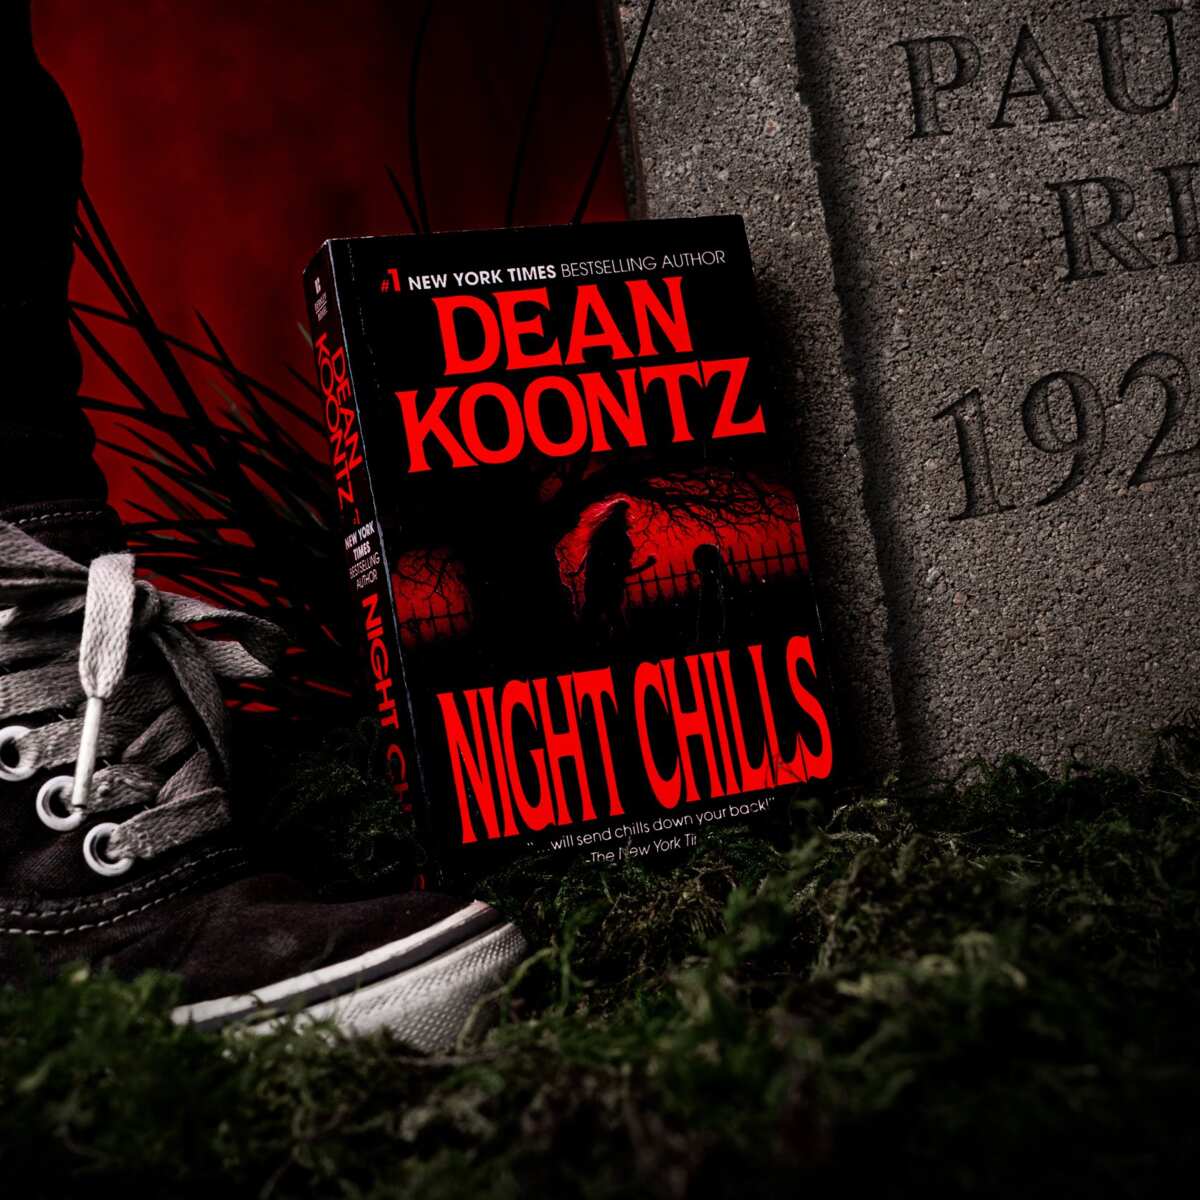 The Darkest Evening of the Year by Dean Koontz